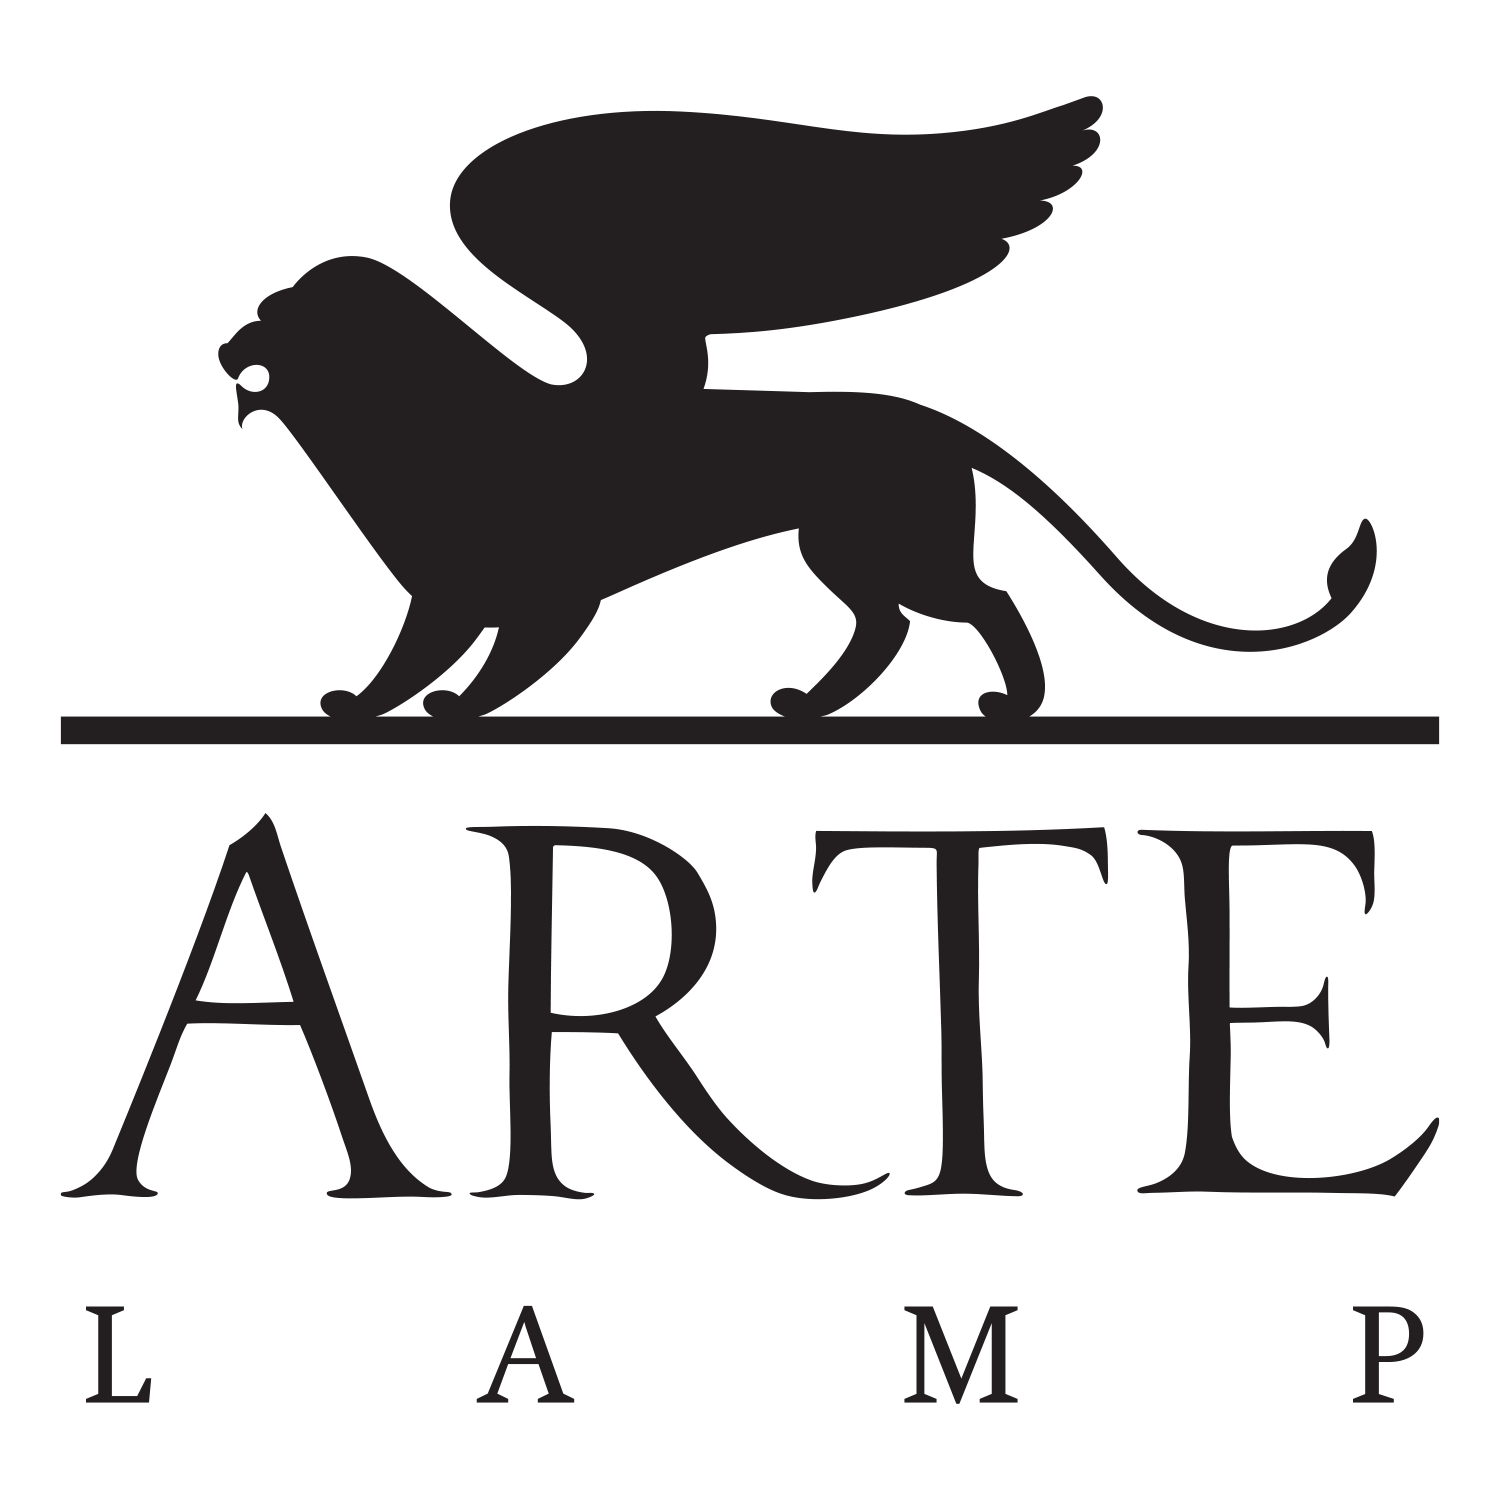 Arte-Lamp